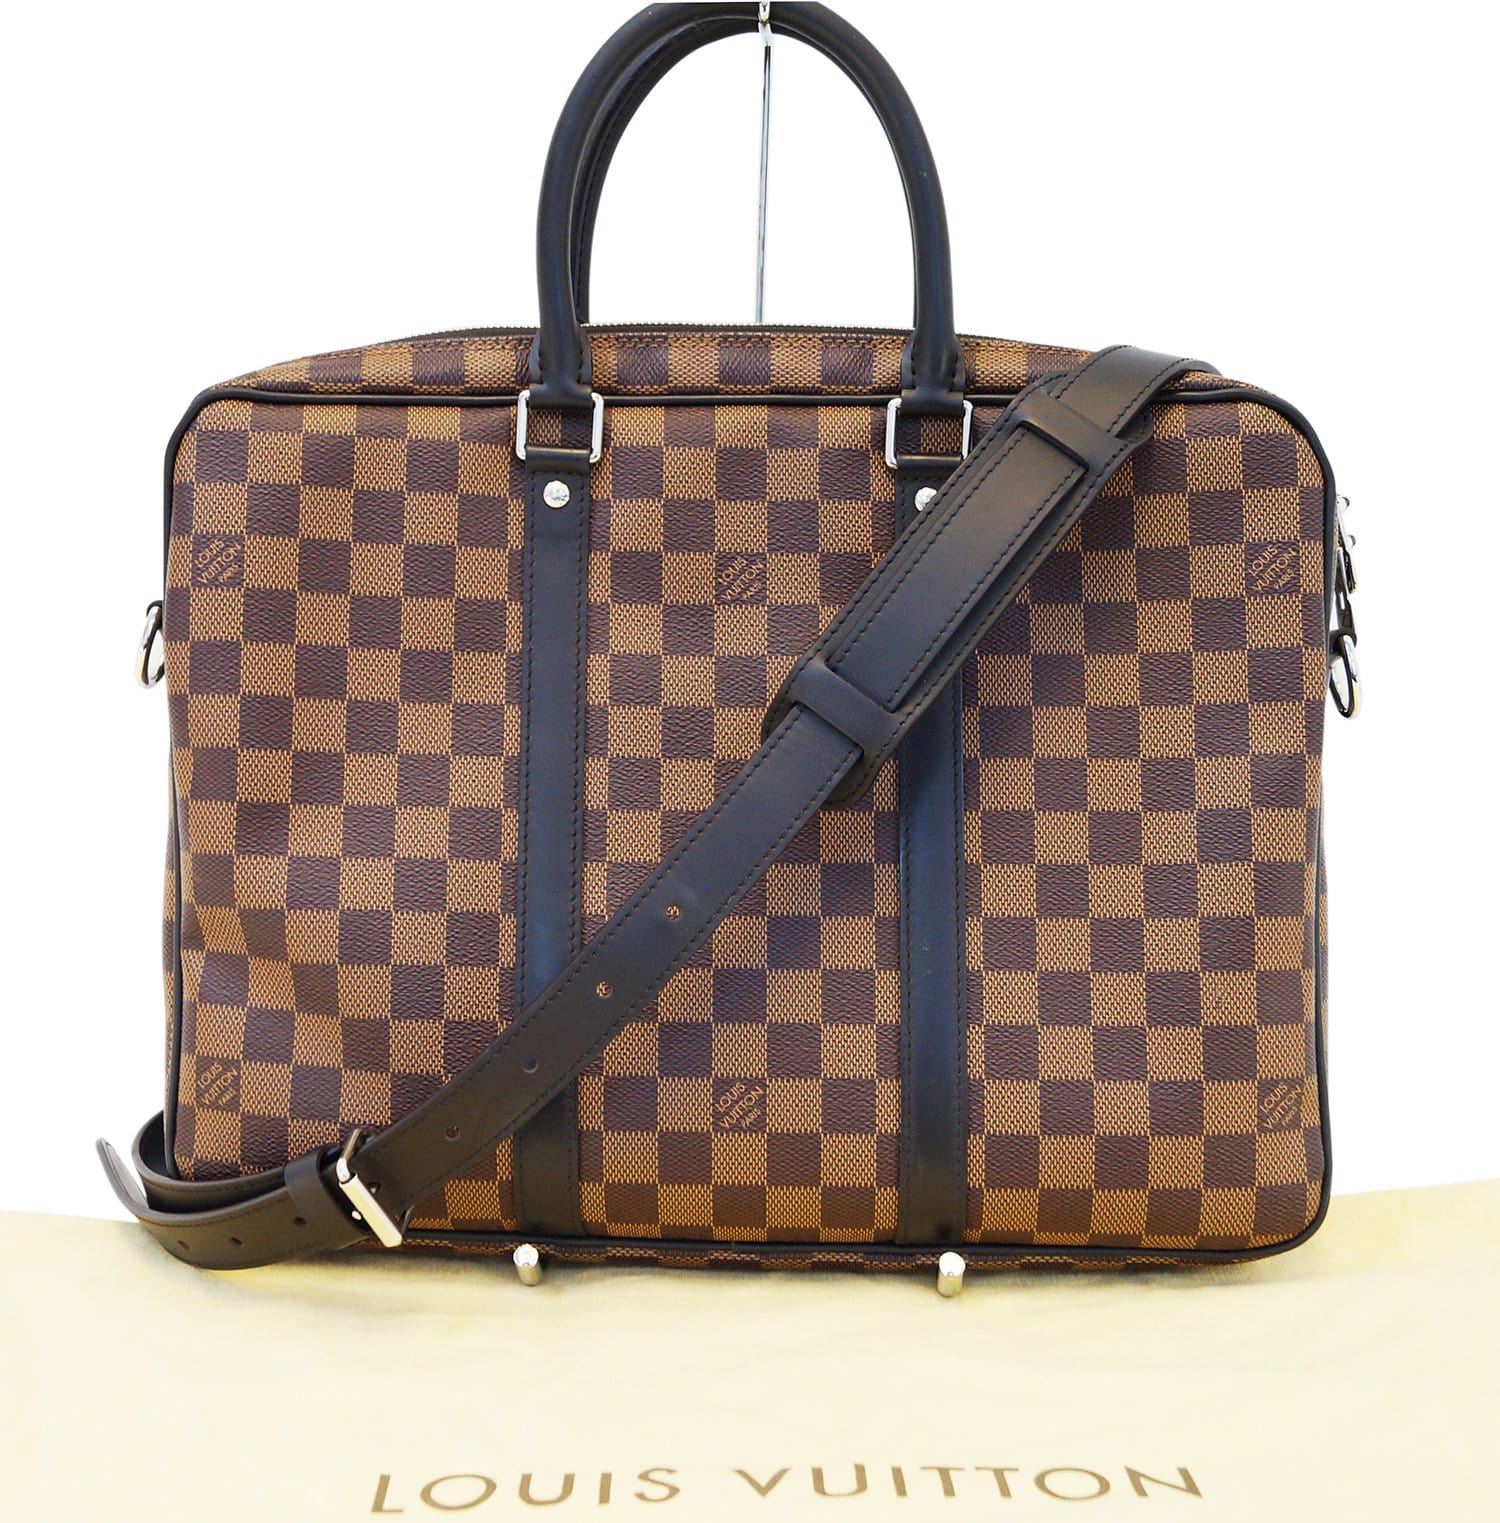 Louis Vuitton Canvas Exterior Bags & Louis Vuitton Damier Ebene Handbags  for Women, Authenticity Guaranteed